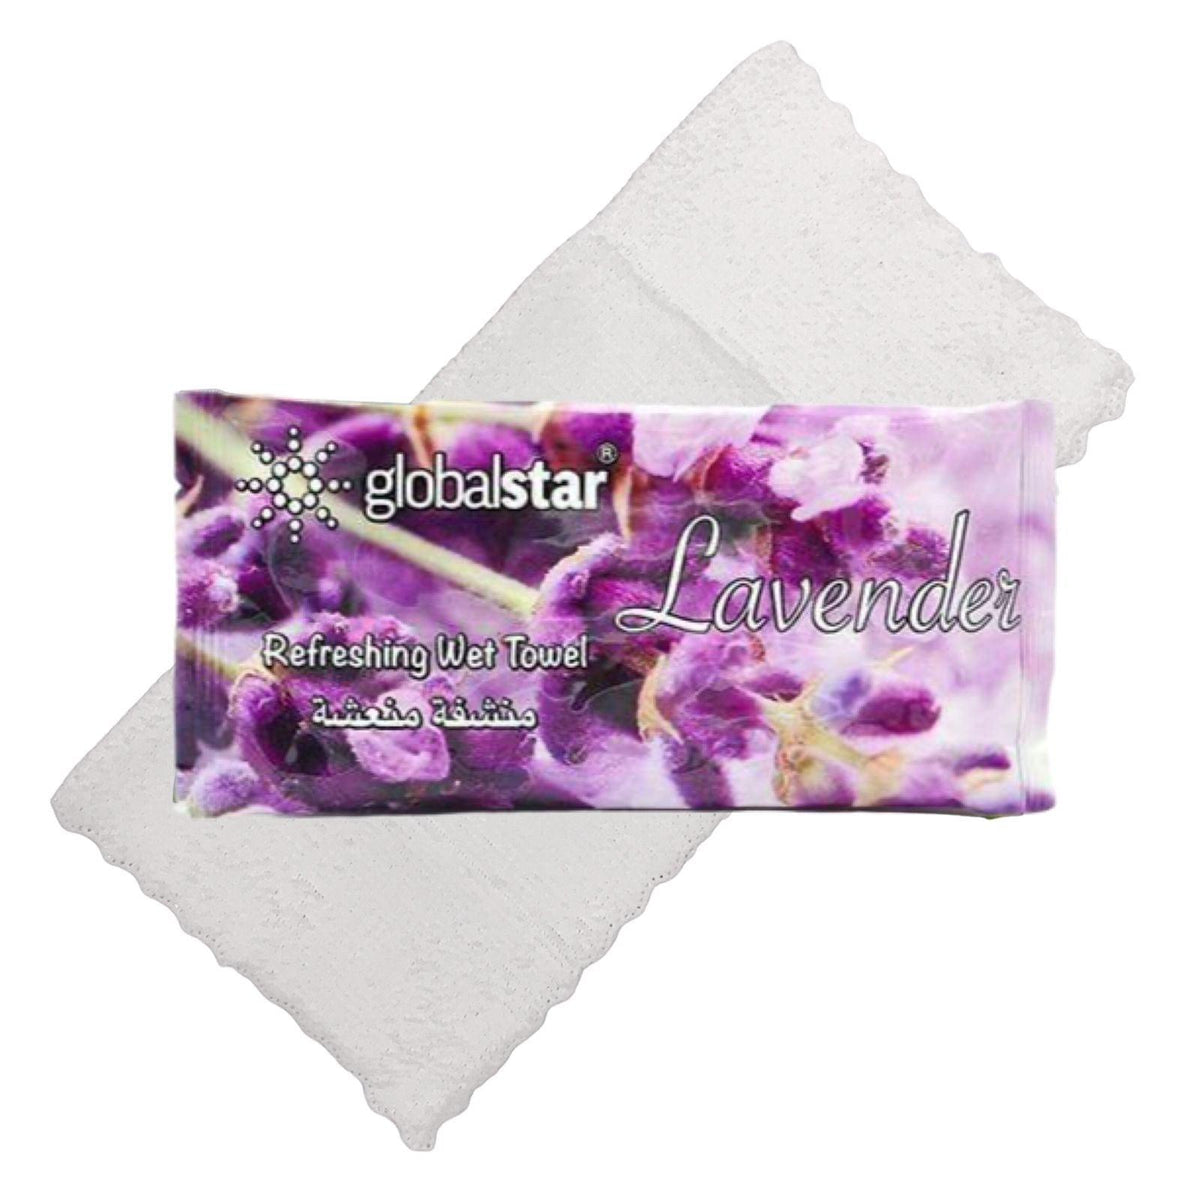 Globalstar Refreshing Wet Towel Lavender 1pc - RT02